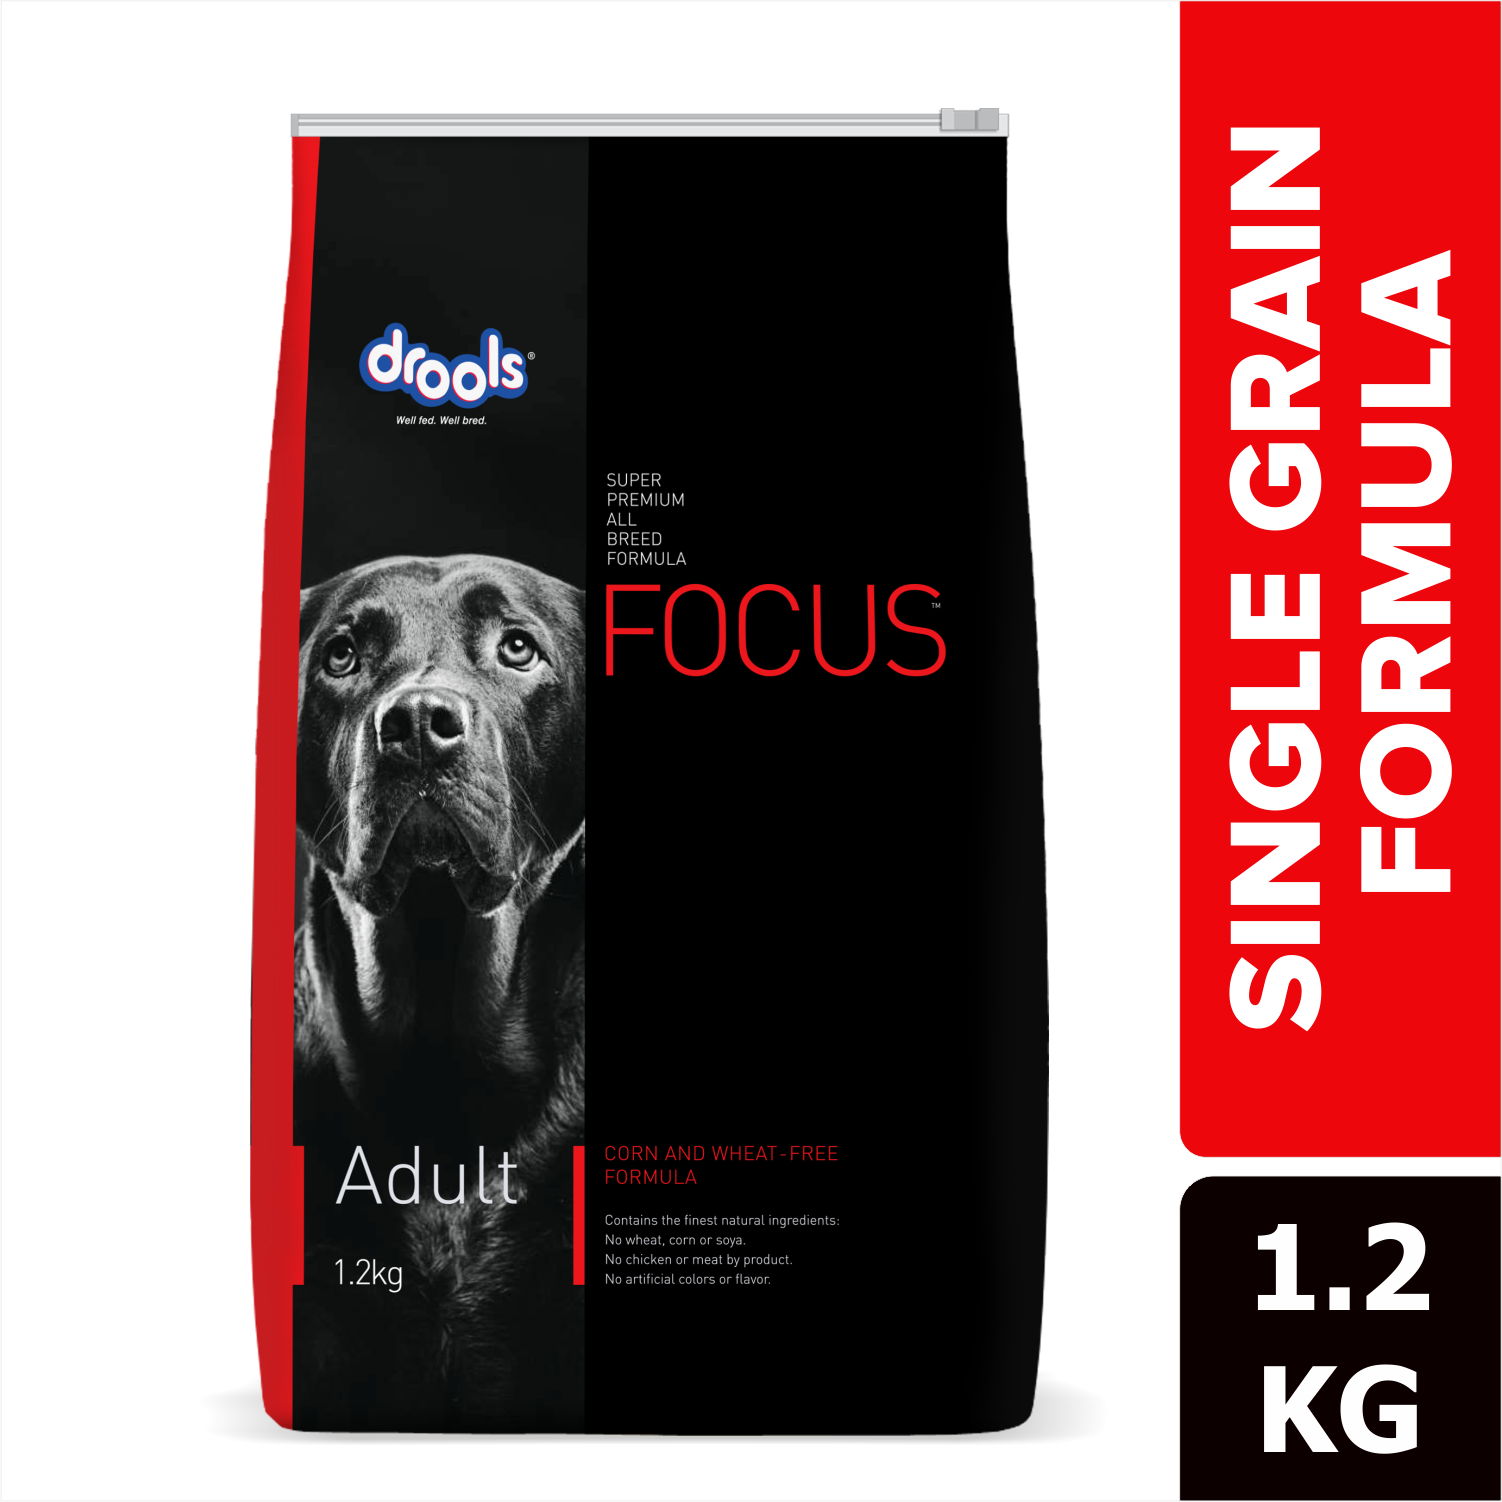 Drools Focus Super Premium Adult Dry Dog Food